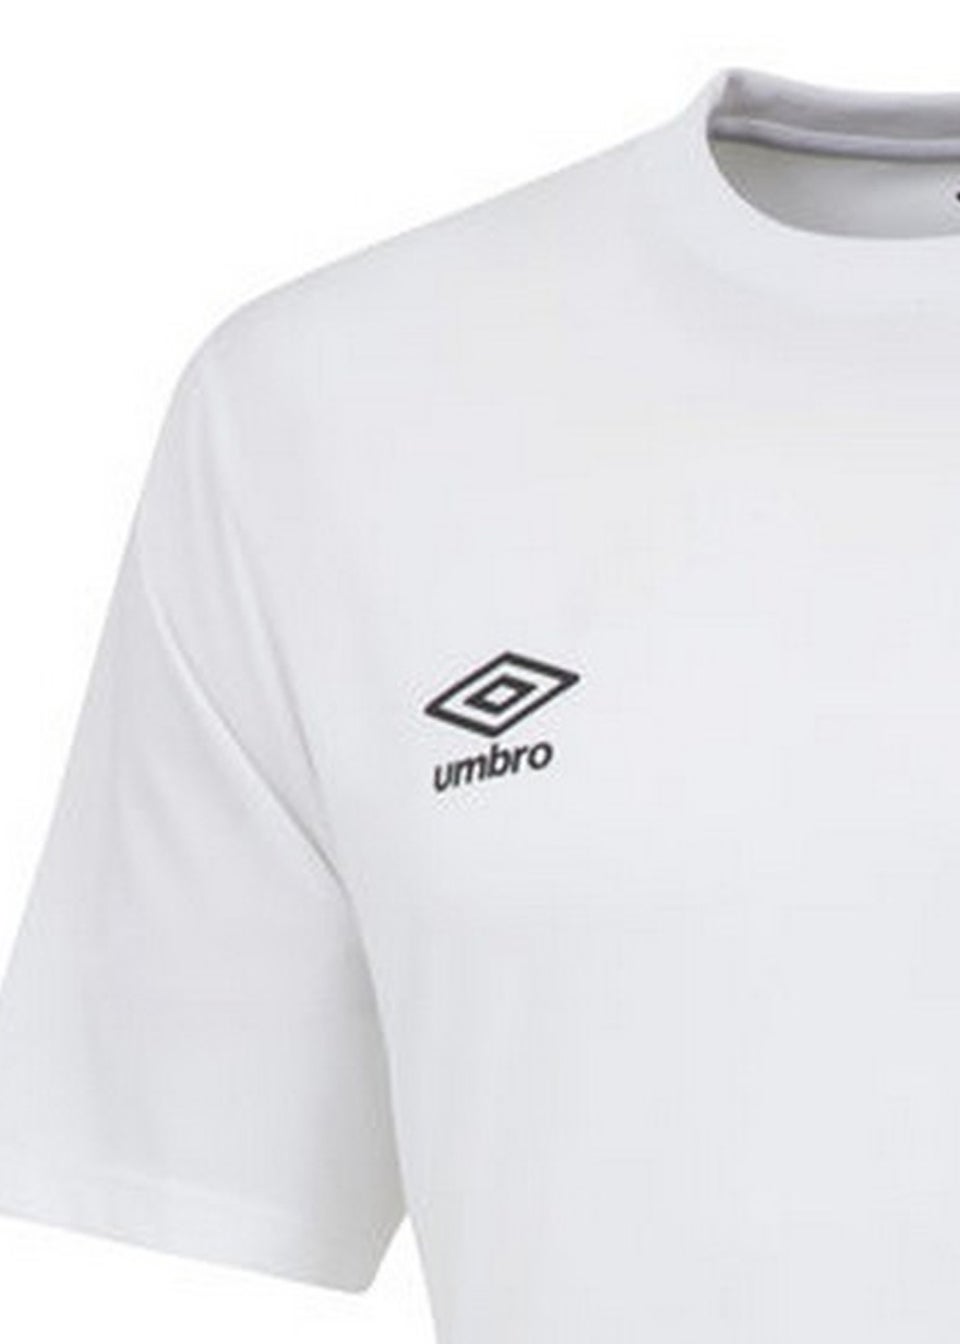 Umbro White Club Short-Sleeved Jersey